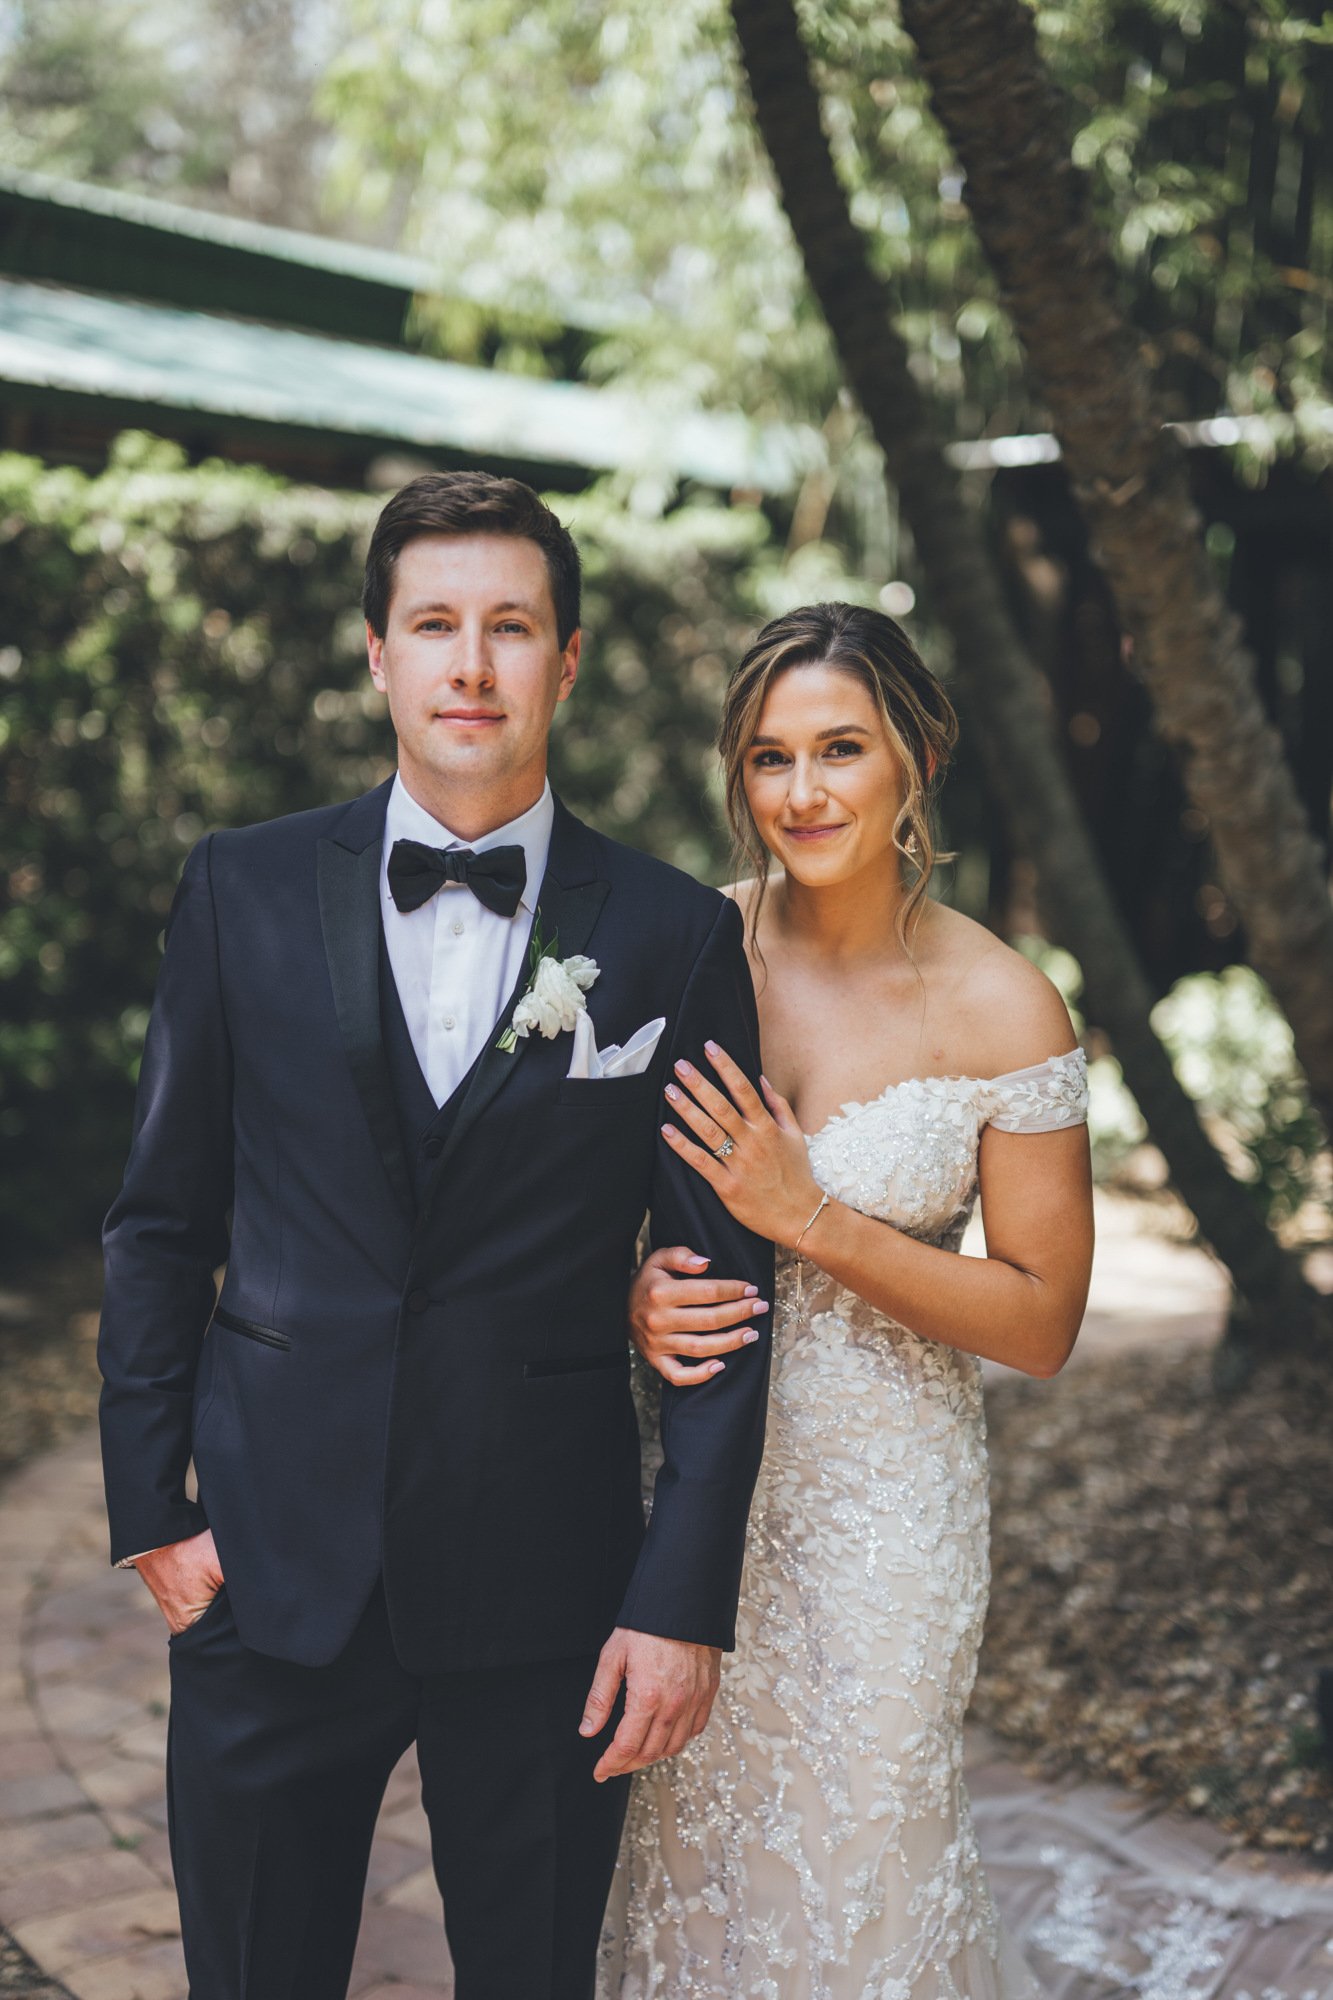 Bow Tie Photo & Video couple during bridal portraits at Club Lake Plantation near Orlando, FL-2.jpg